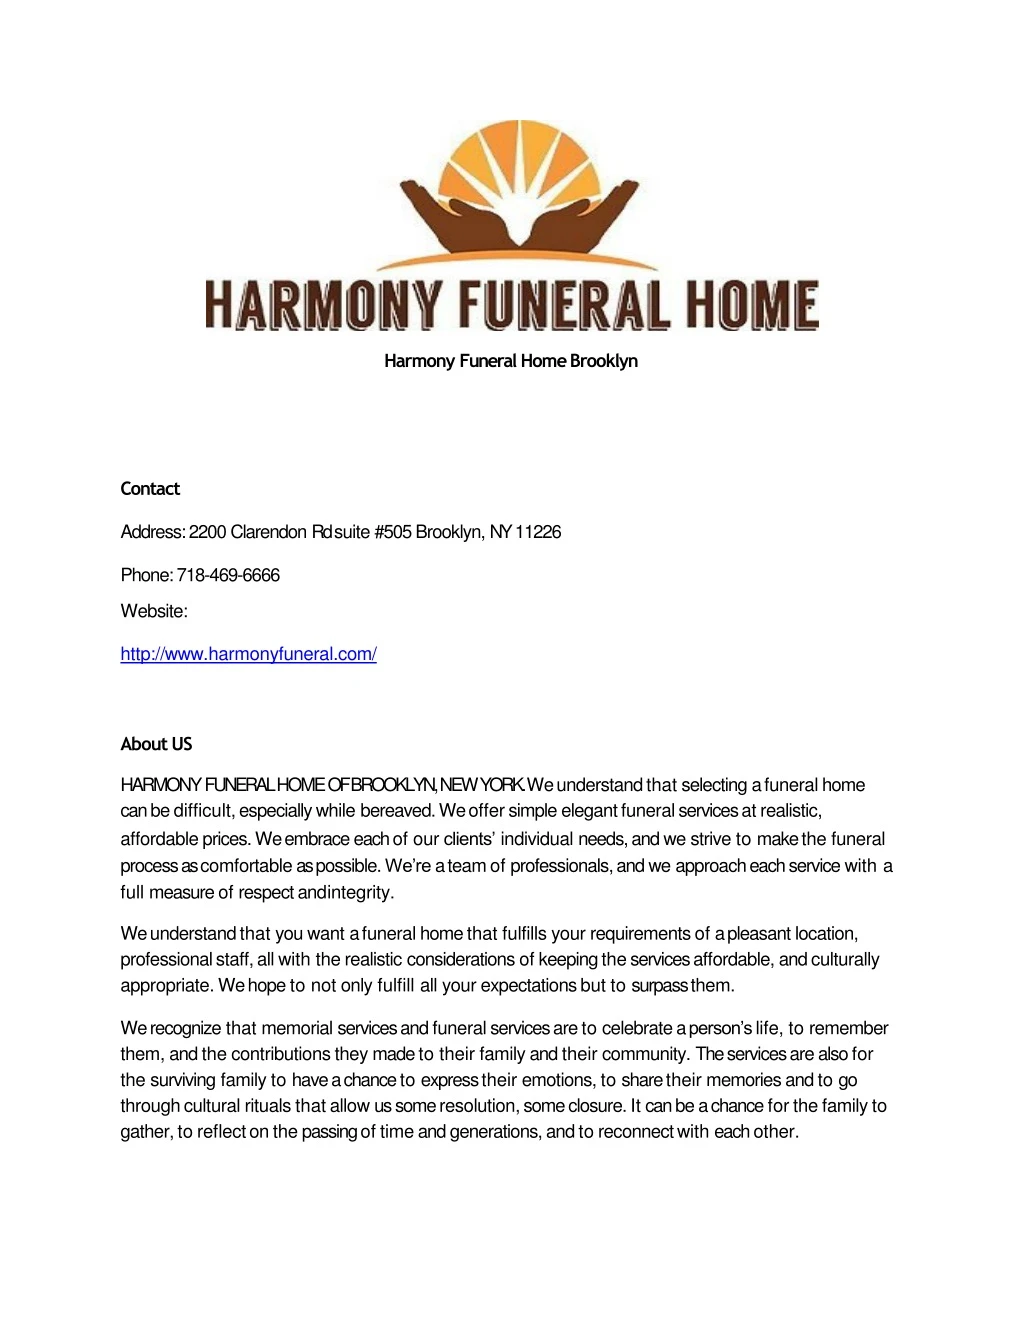 harmony funeral home brooklyn